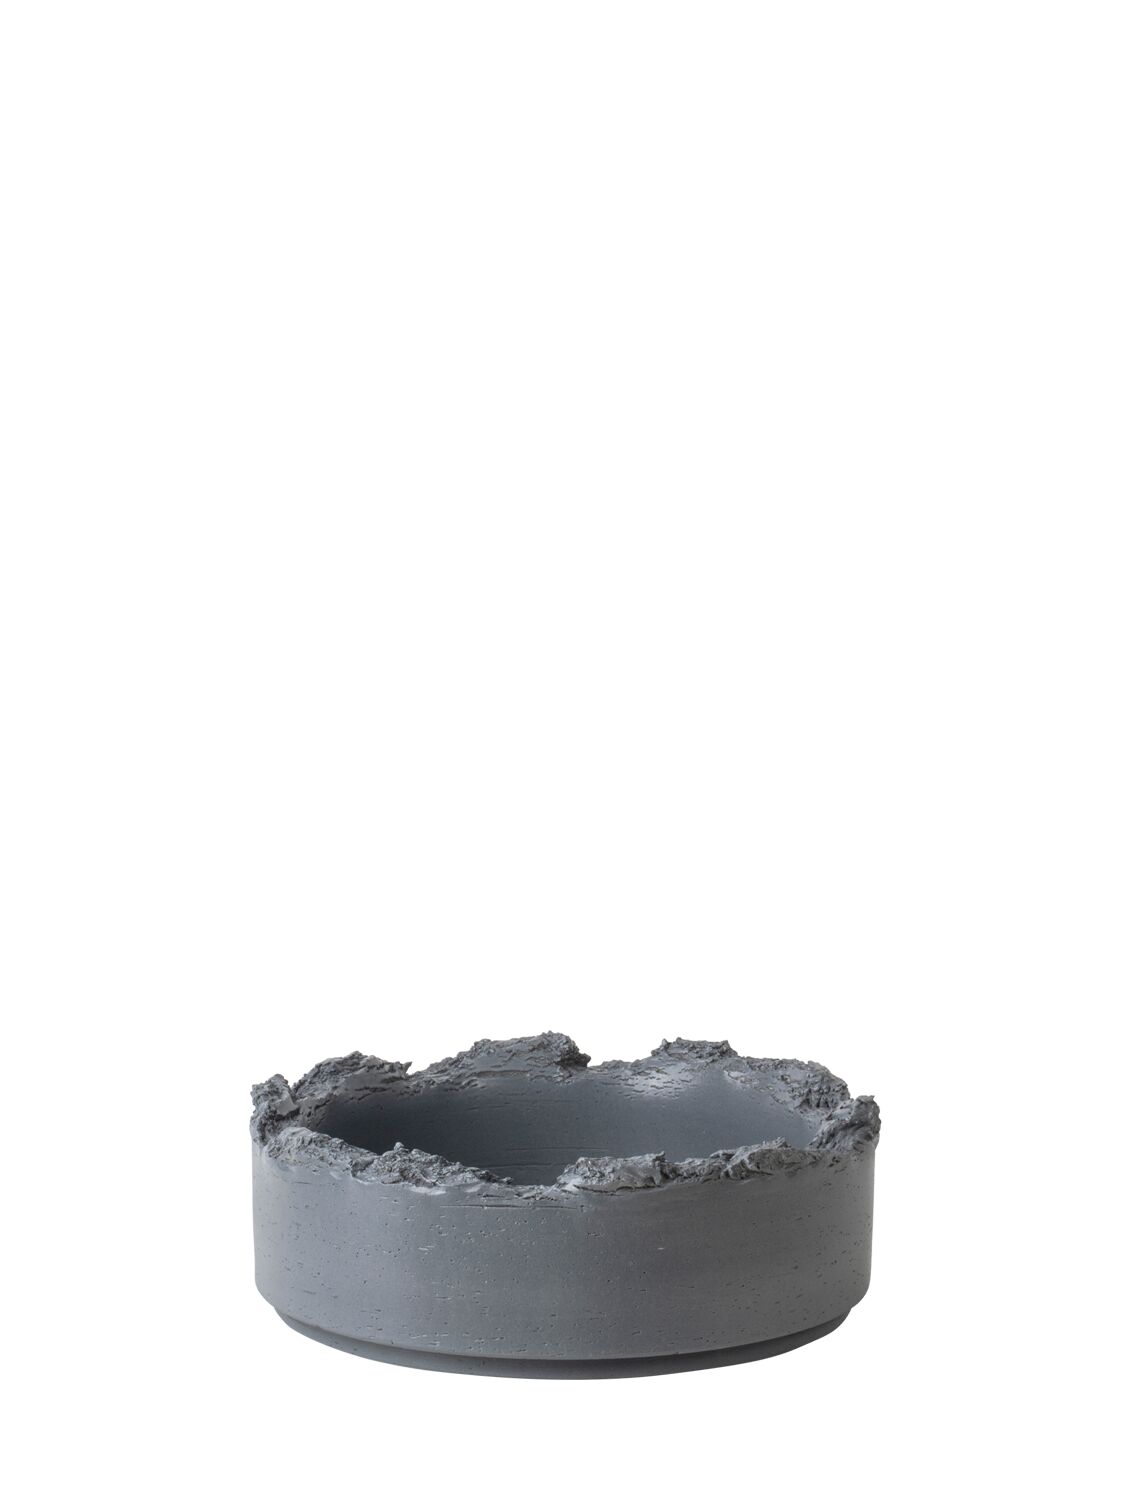 Bitossi Ceramiche Formafantasma Clay Bowl In Grey